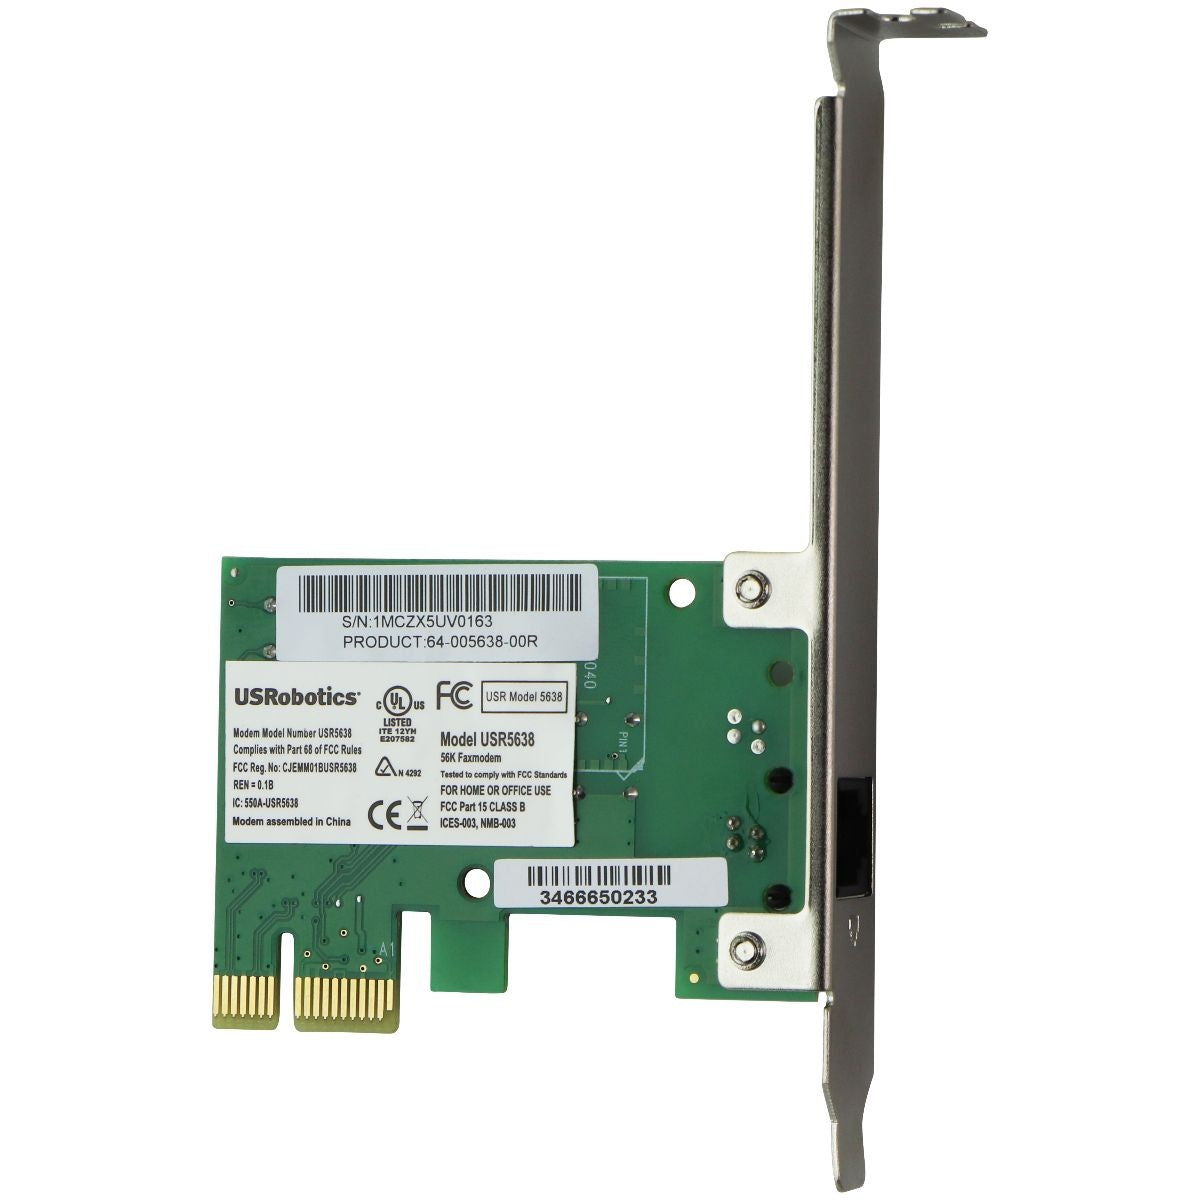 USRobotics 56K V.92 PCI Express Dial-Up Fax and Data Modem (USR5638) Internal Modem Cards USRobotics    - Simple Cell Bulk Wholesale Pricing - USA Seller